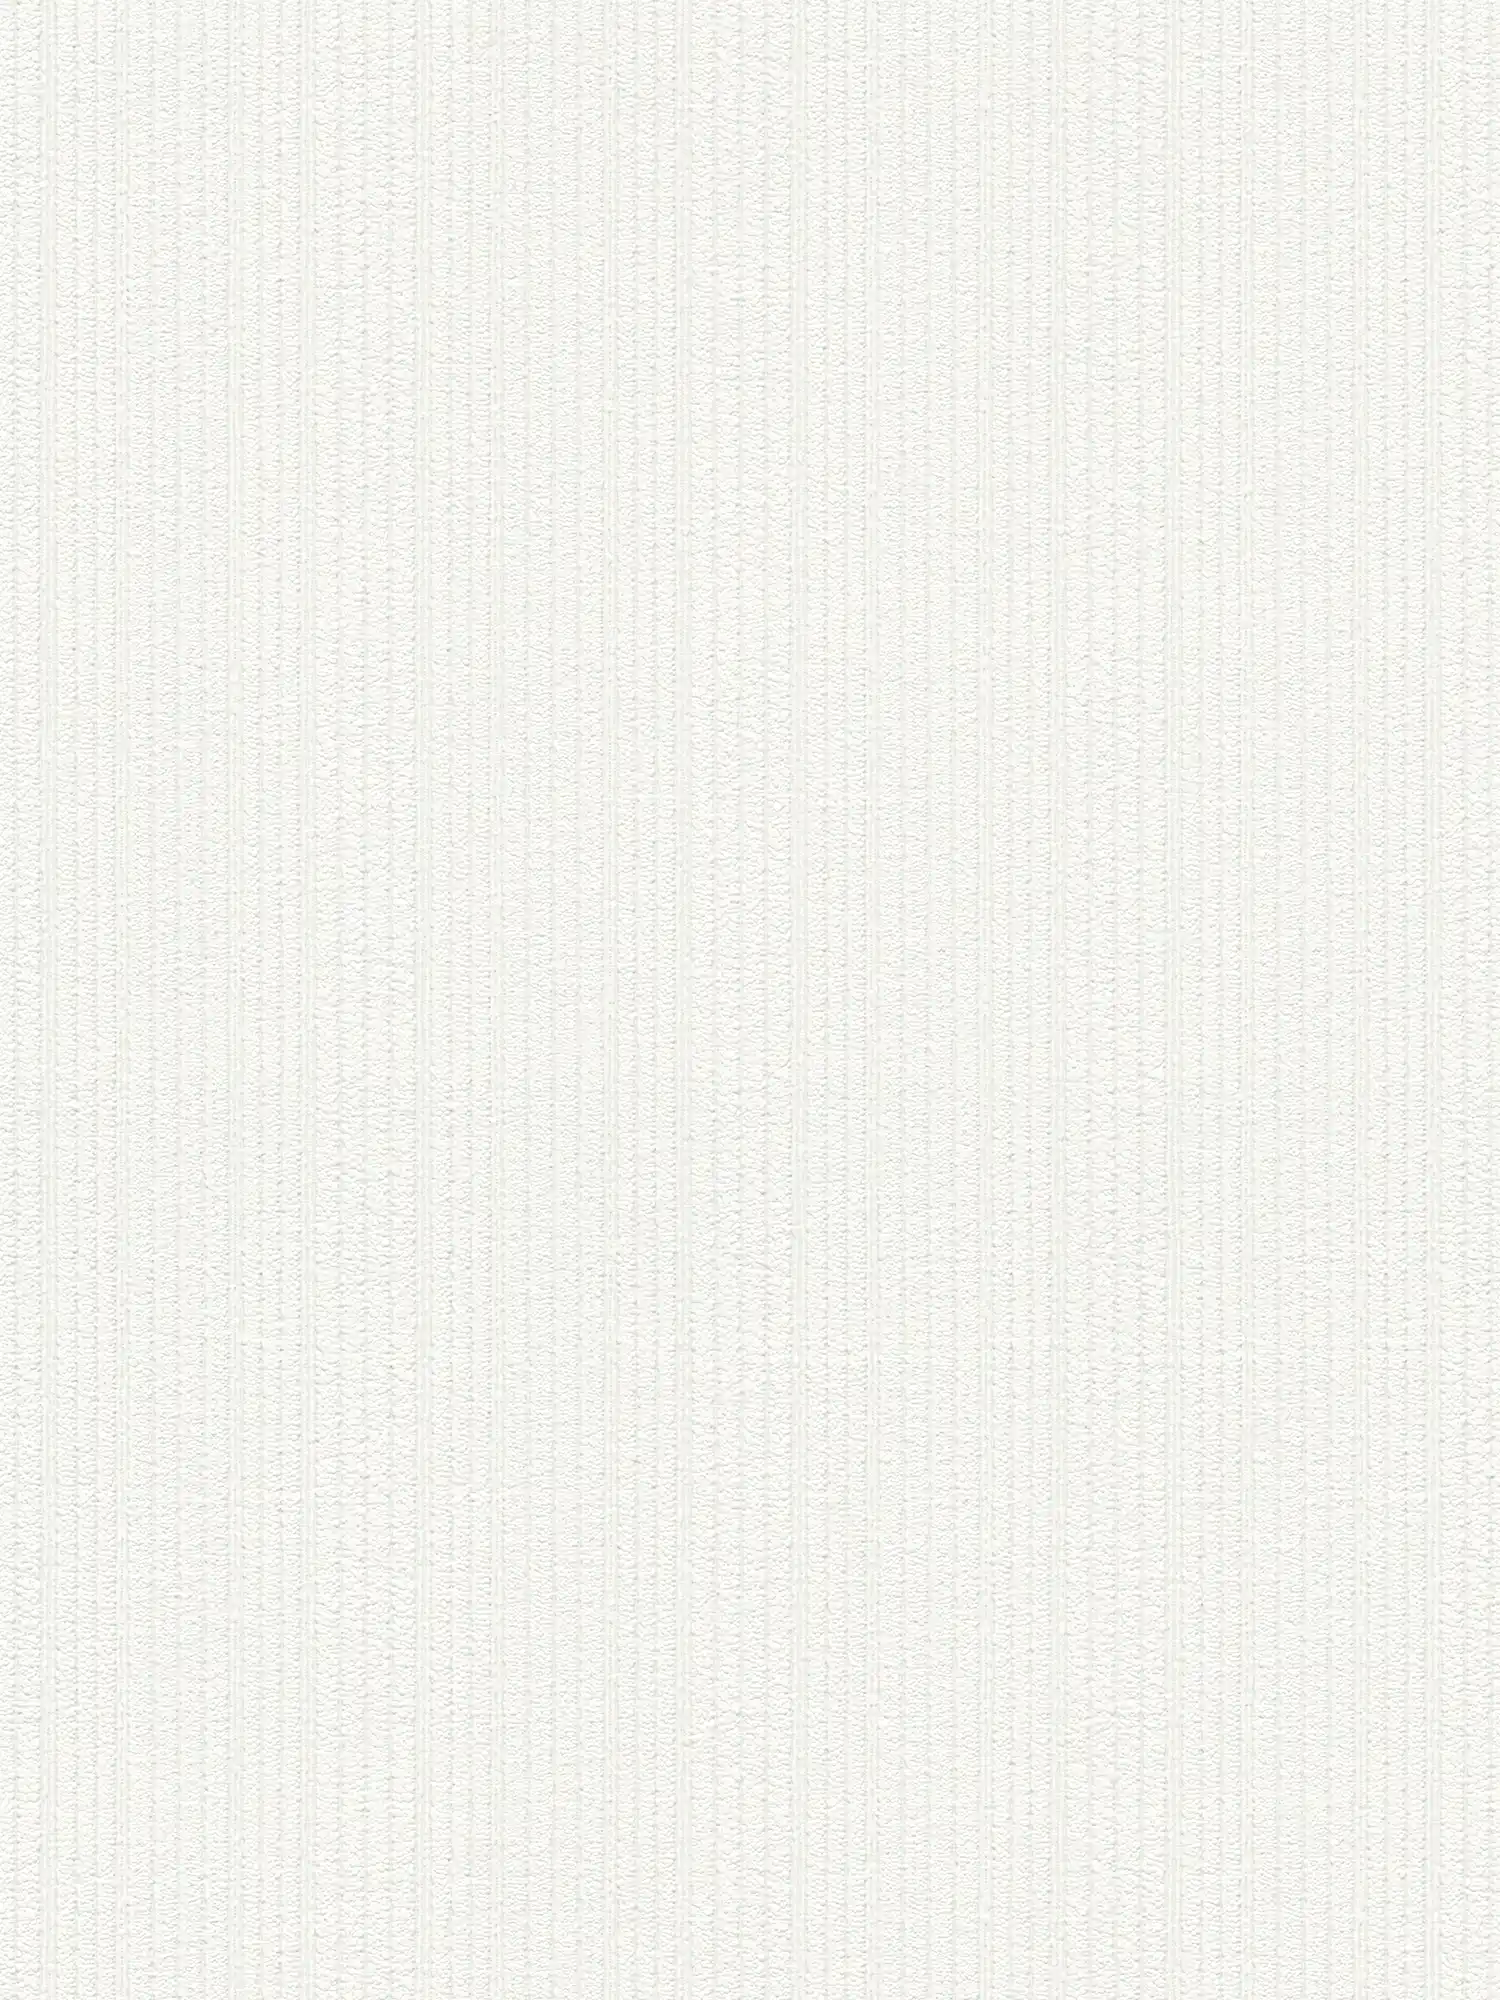 Papel pintado blanco con rayas texturizadas - blanco
